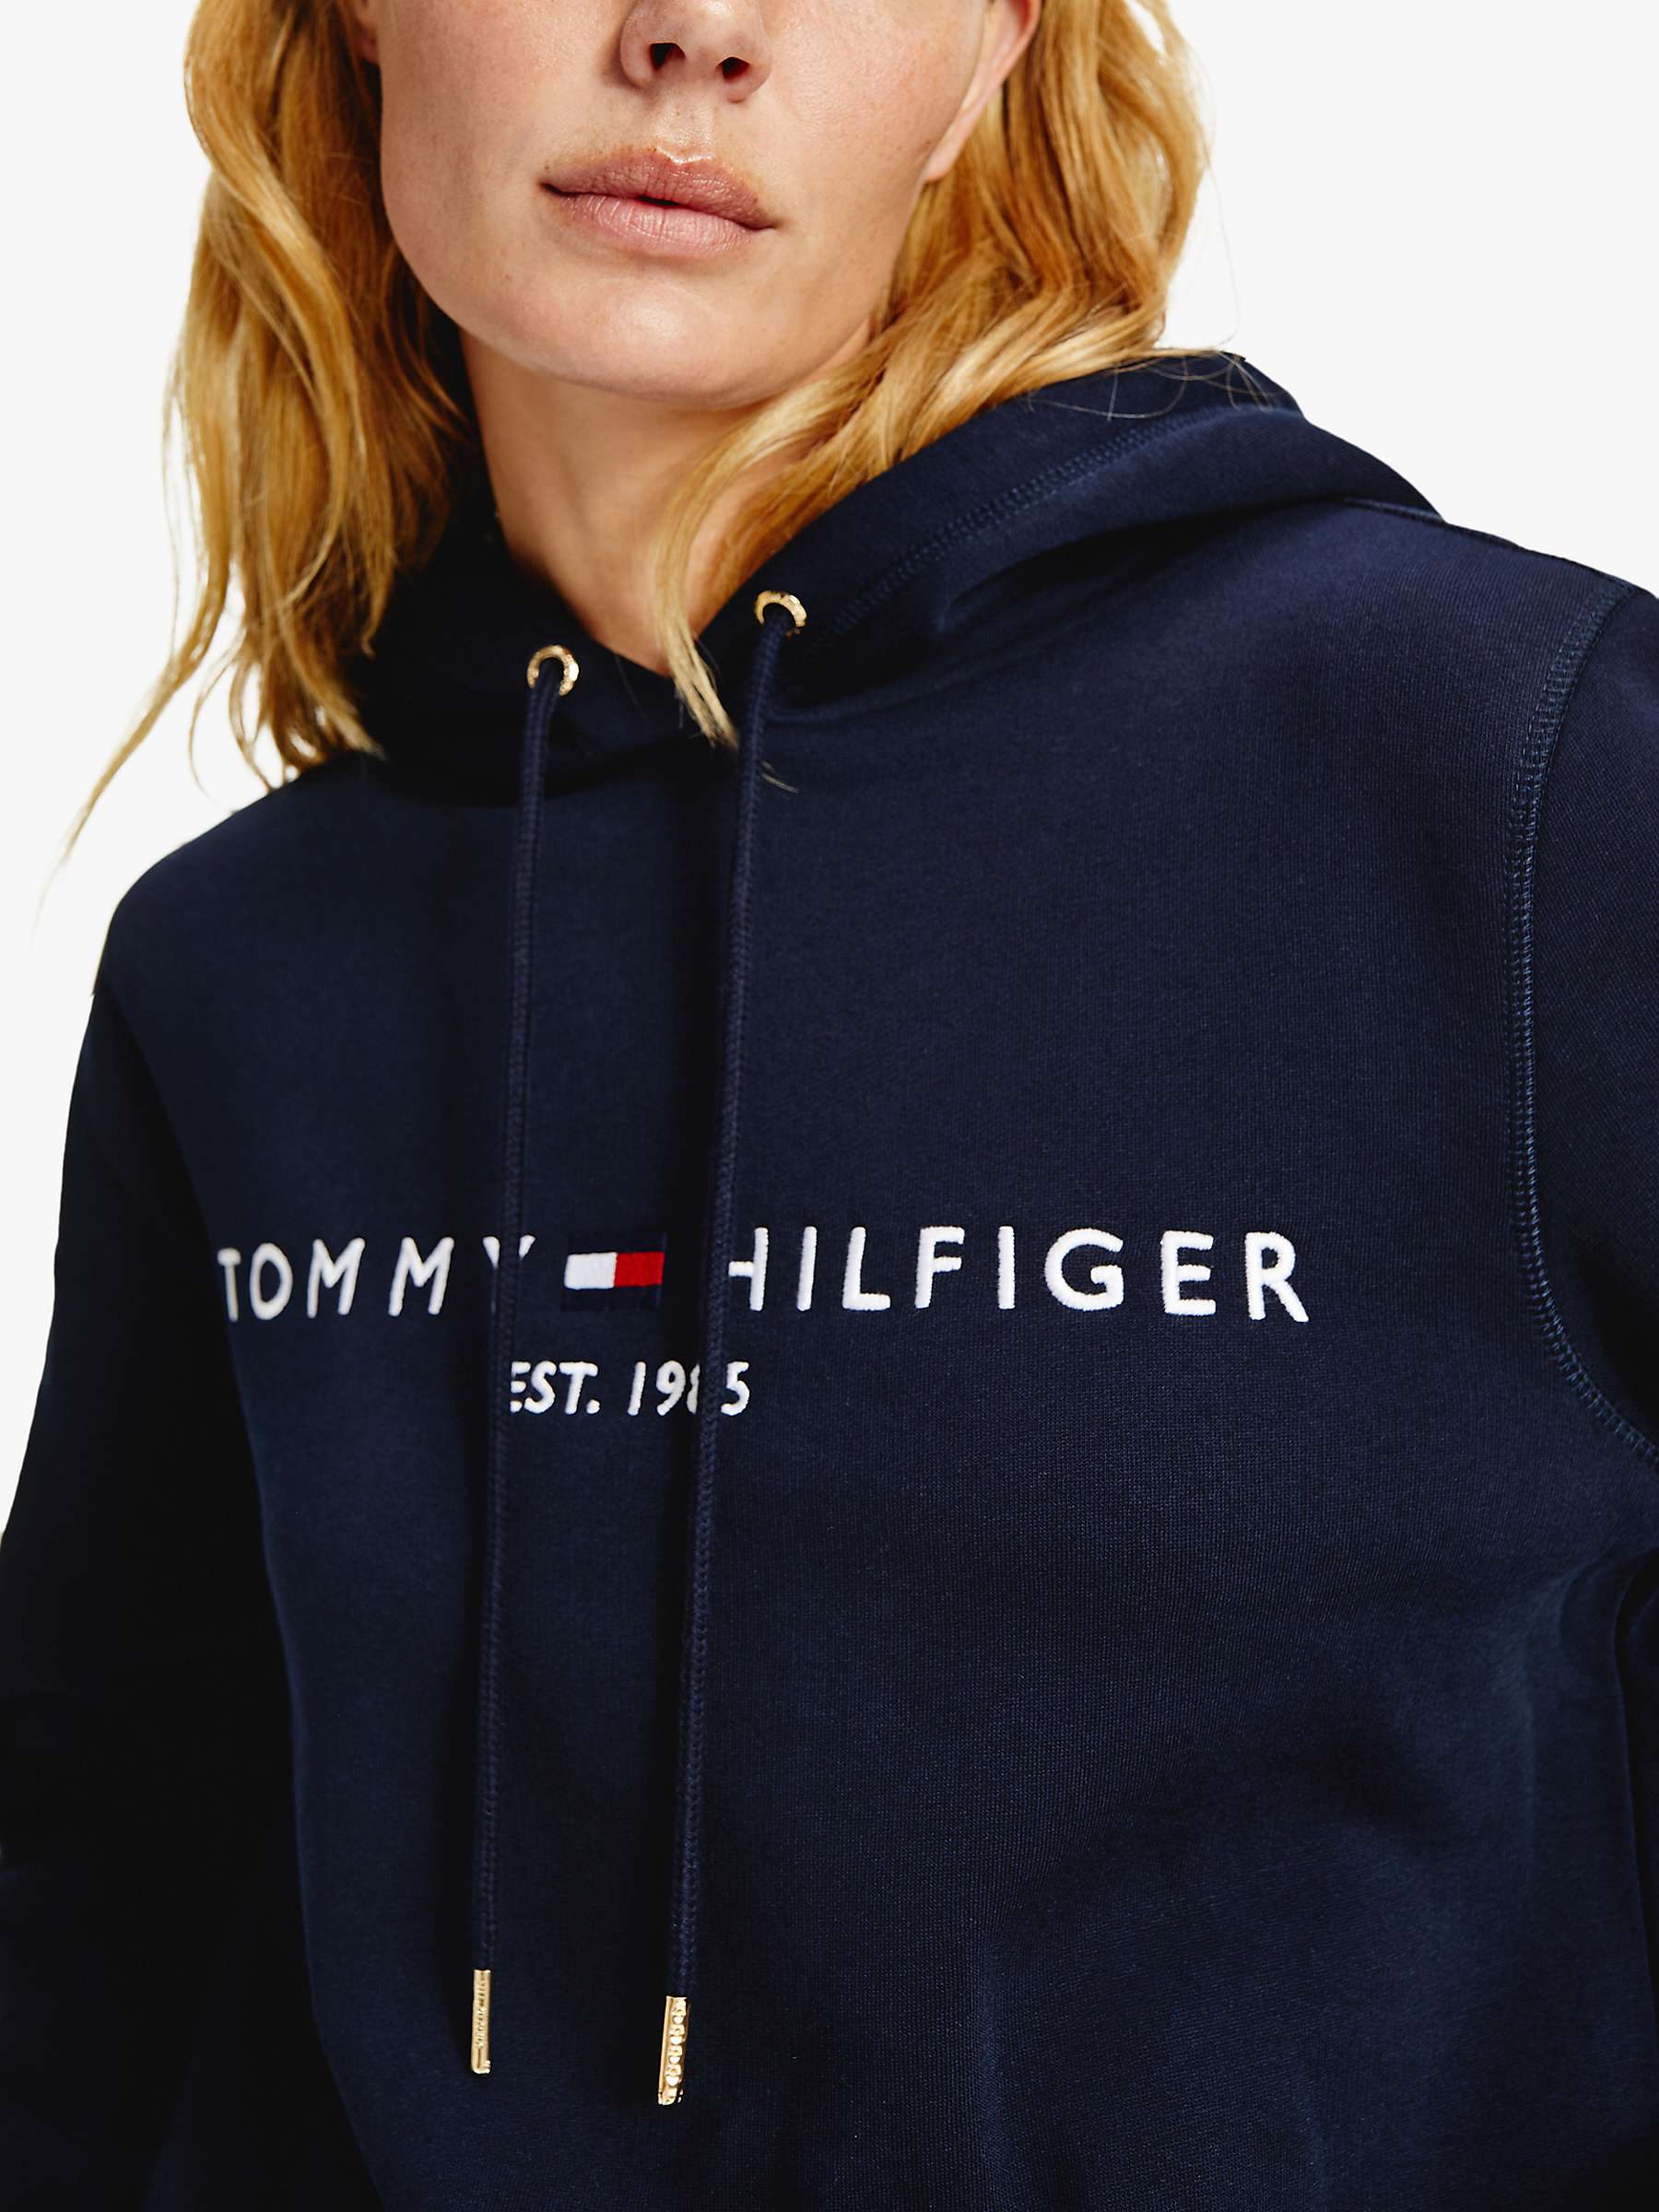 Buy Tommy Hilfiger Heritage Logo Hoodie Online at johnlewis.com